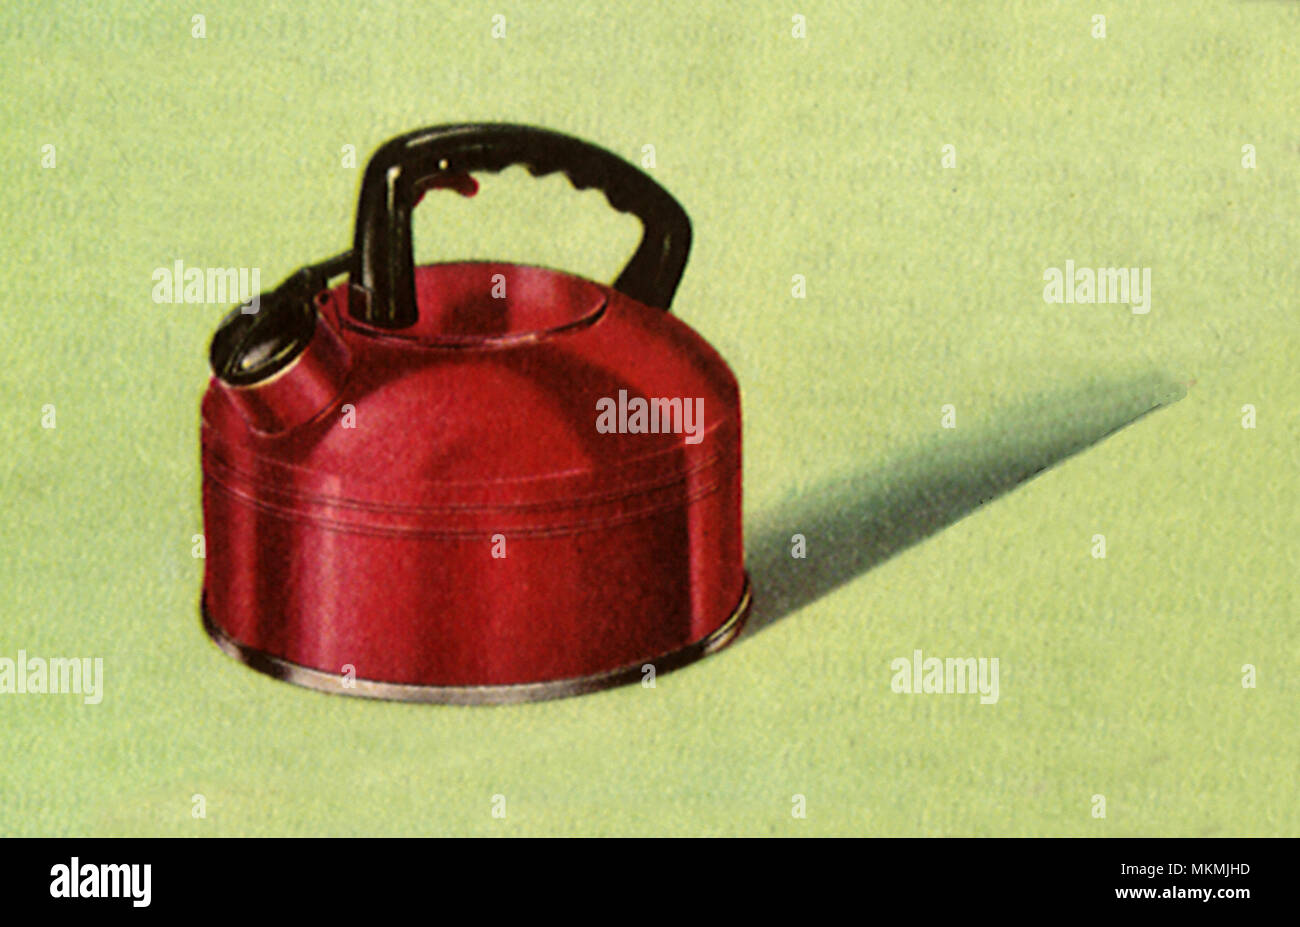 https://c8.alamy.com/comp/MKMJHD/red-tea-kettle-MKMJHD.jpg